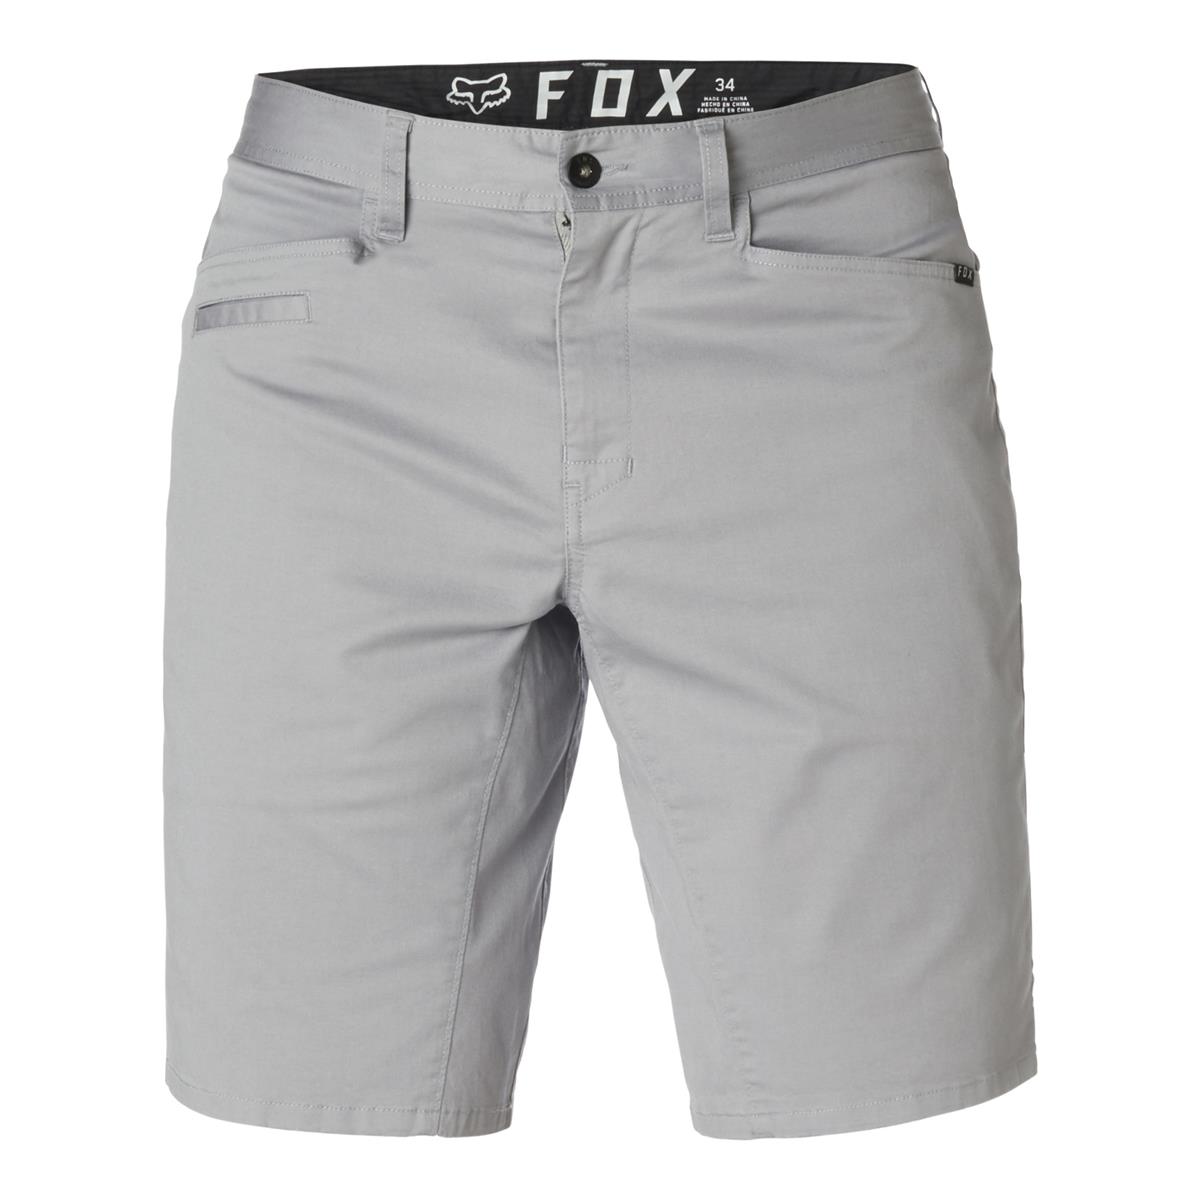 Fox Shorts Stretch Chino Steel Grey